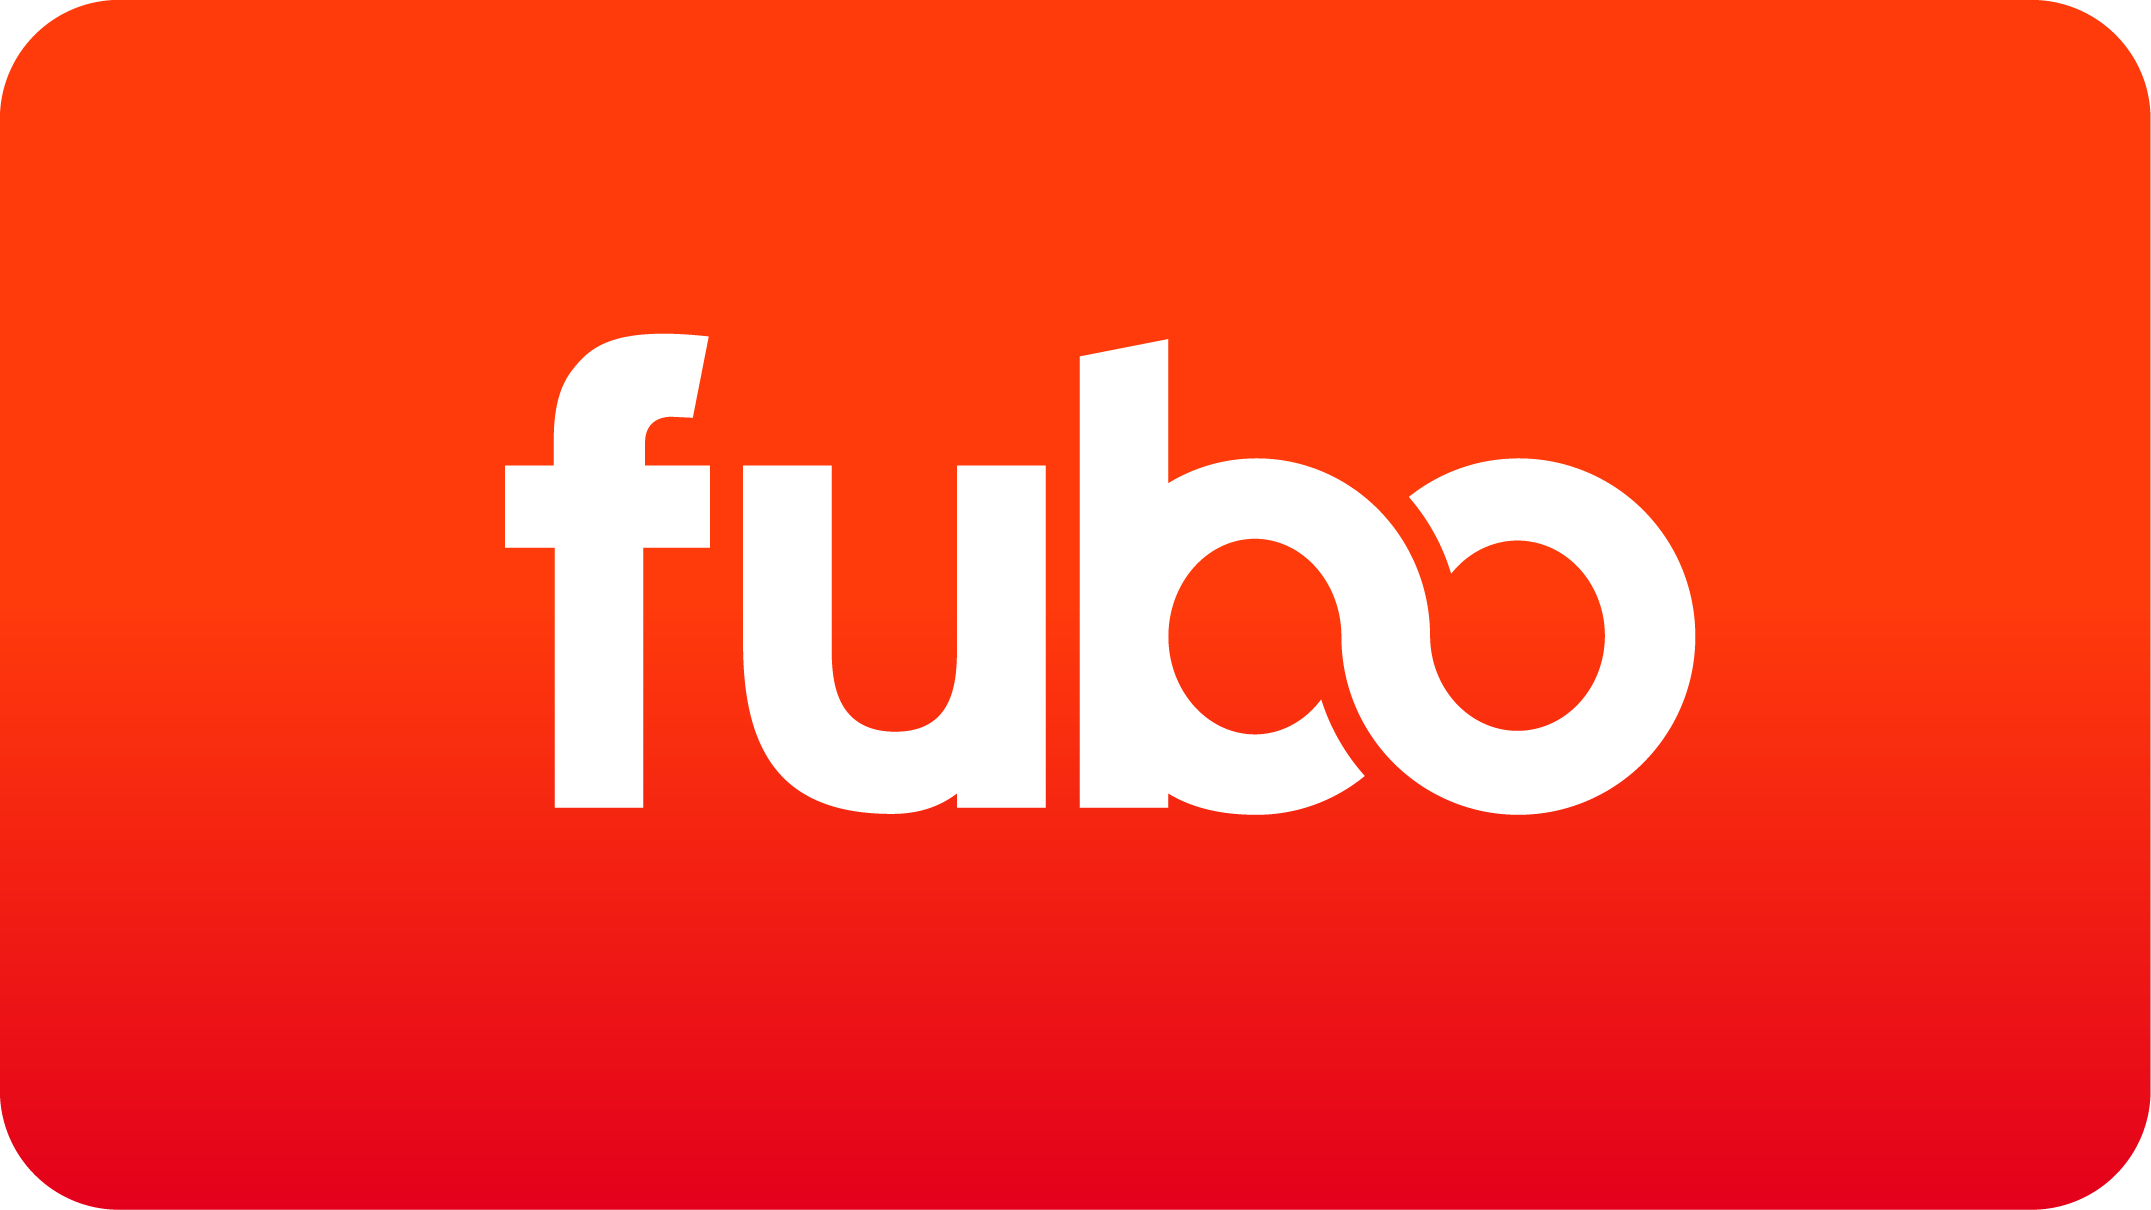 Fubo is Launching 10 Dedicated Music Channels Called Fubo Radio